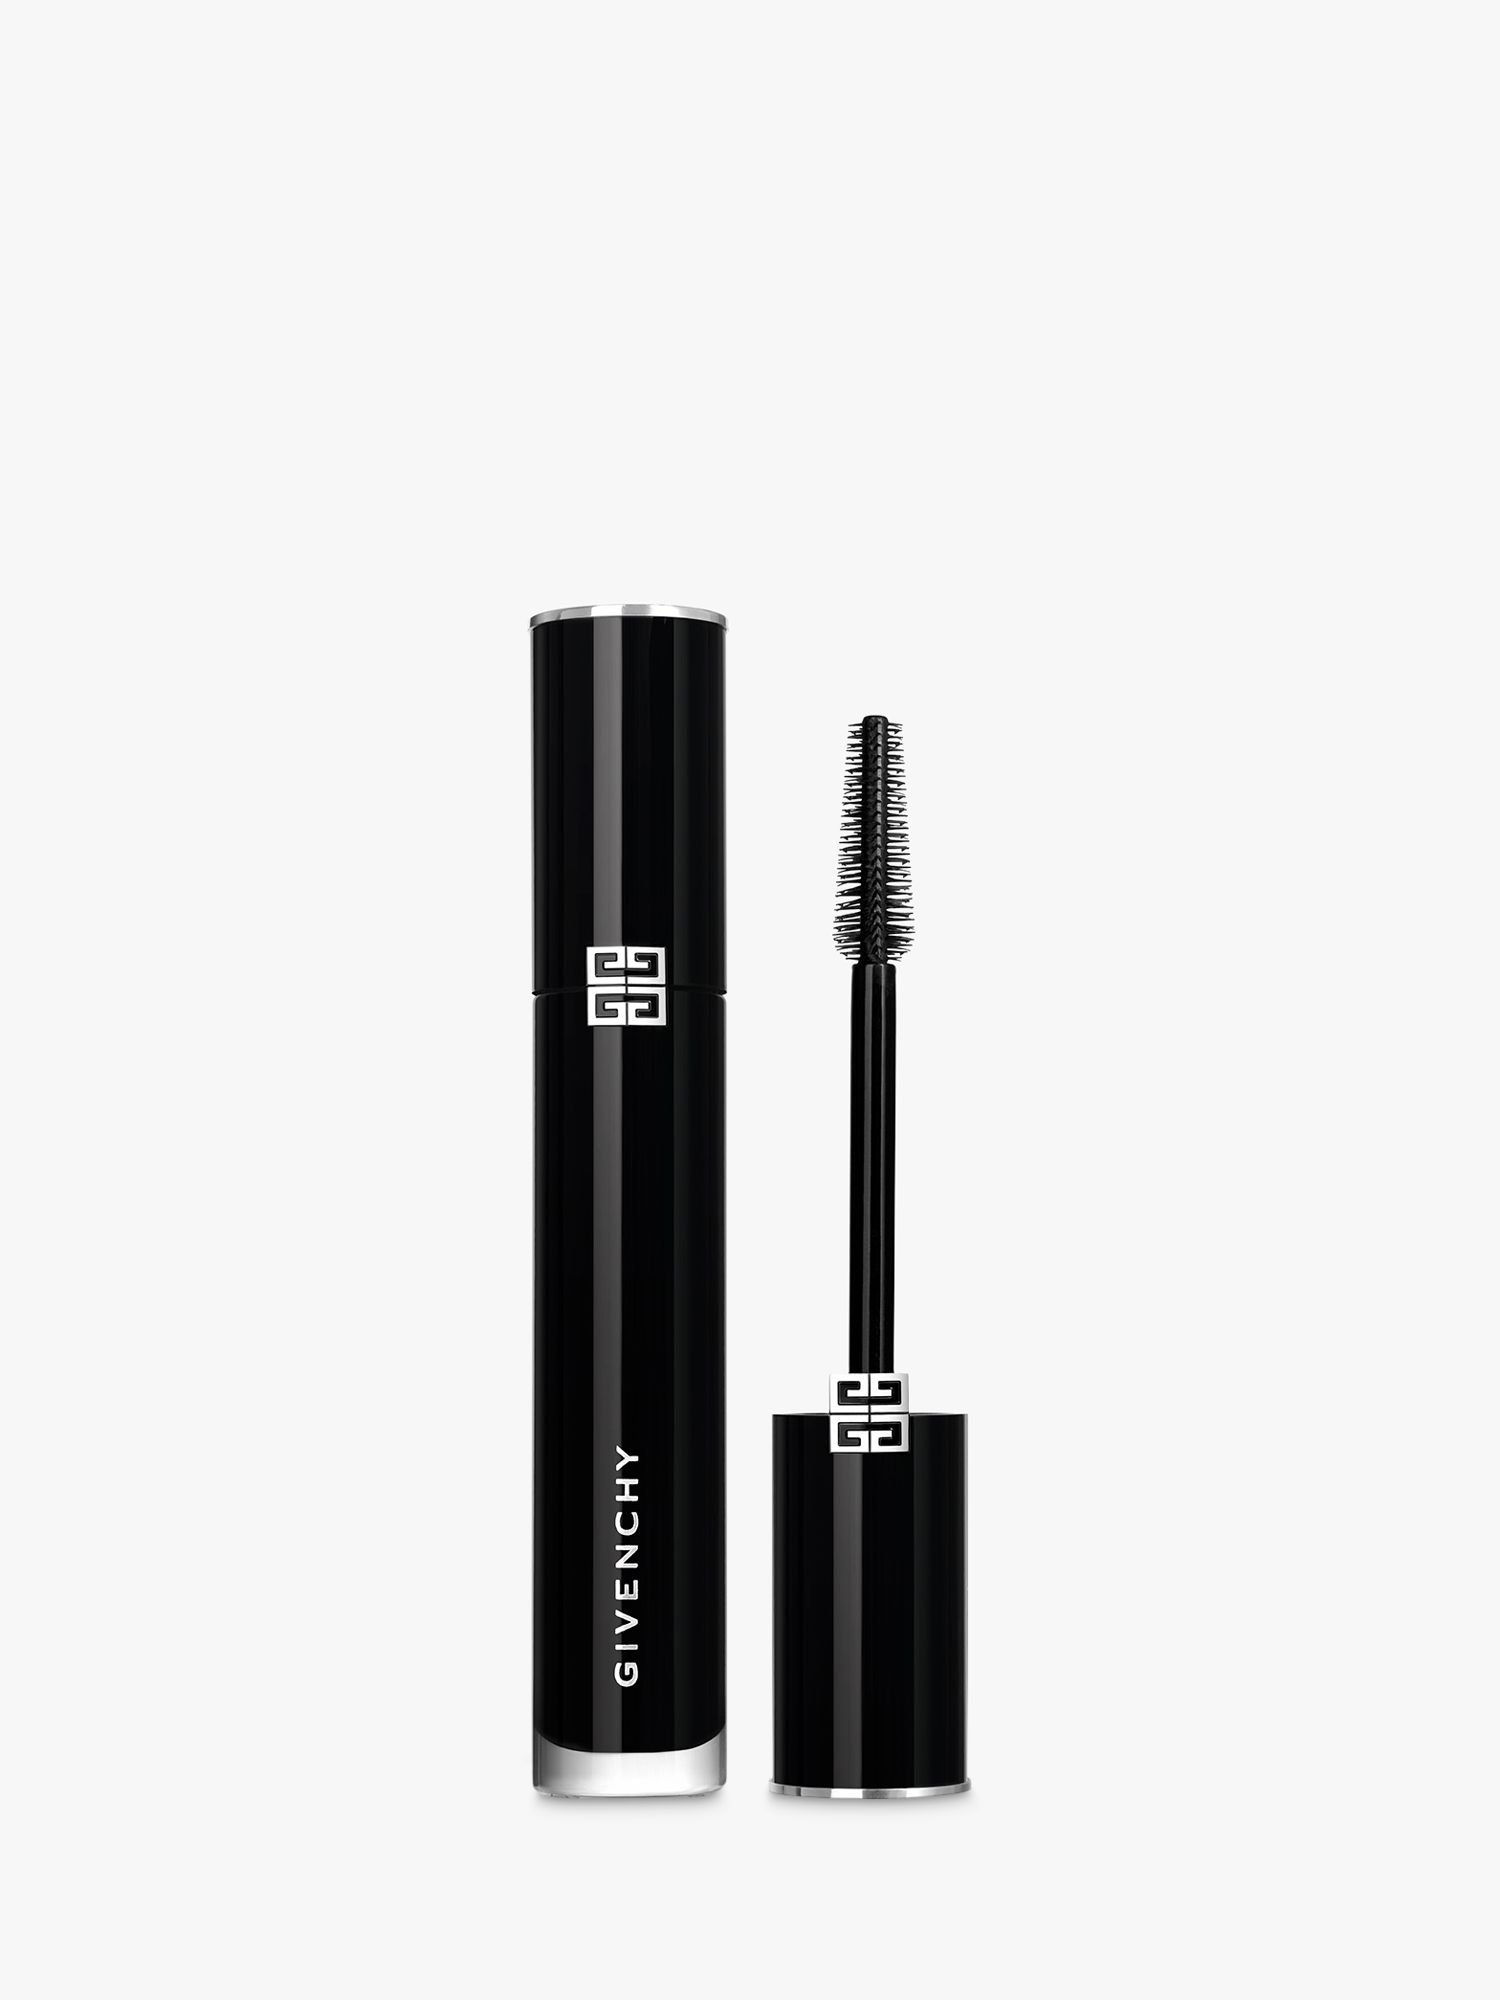 Givenchy L'Interdit Couture Volume Mascara, Ultra Black 01 1